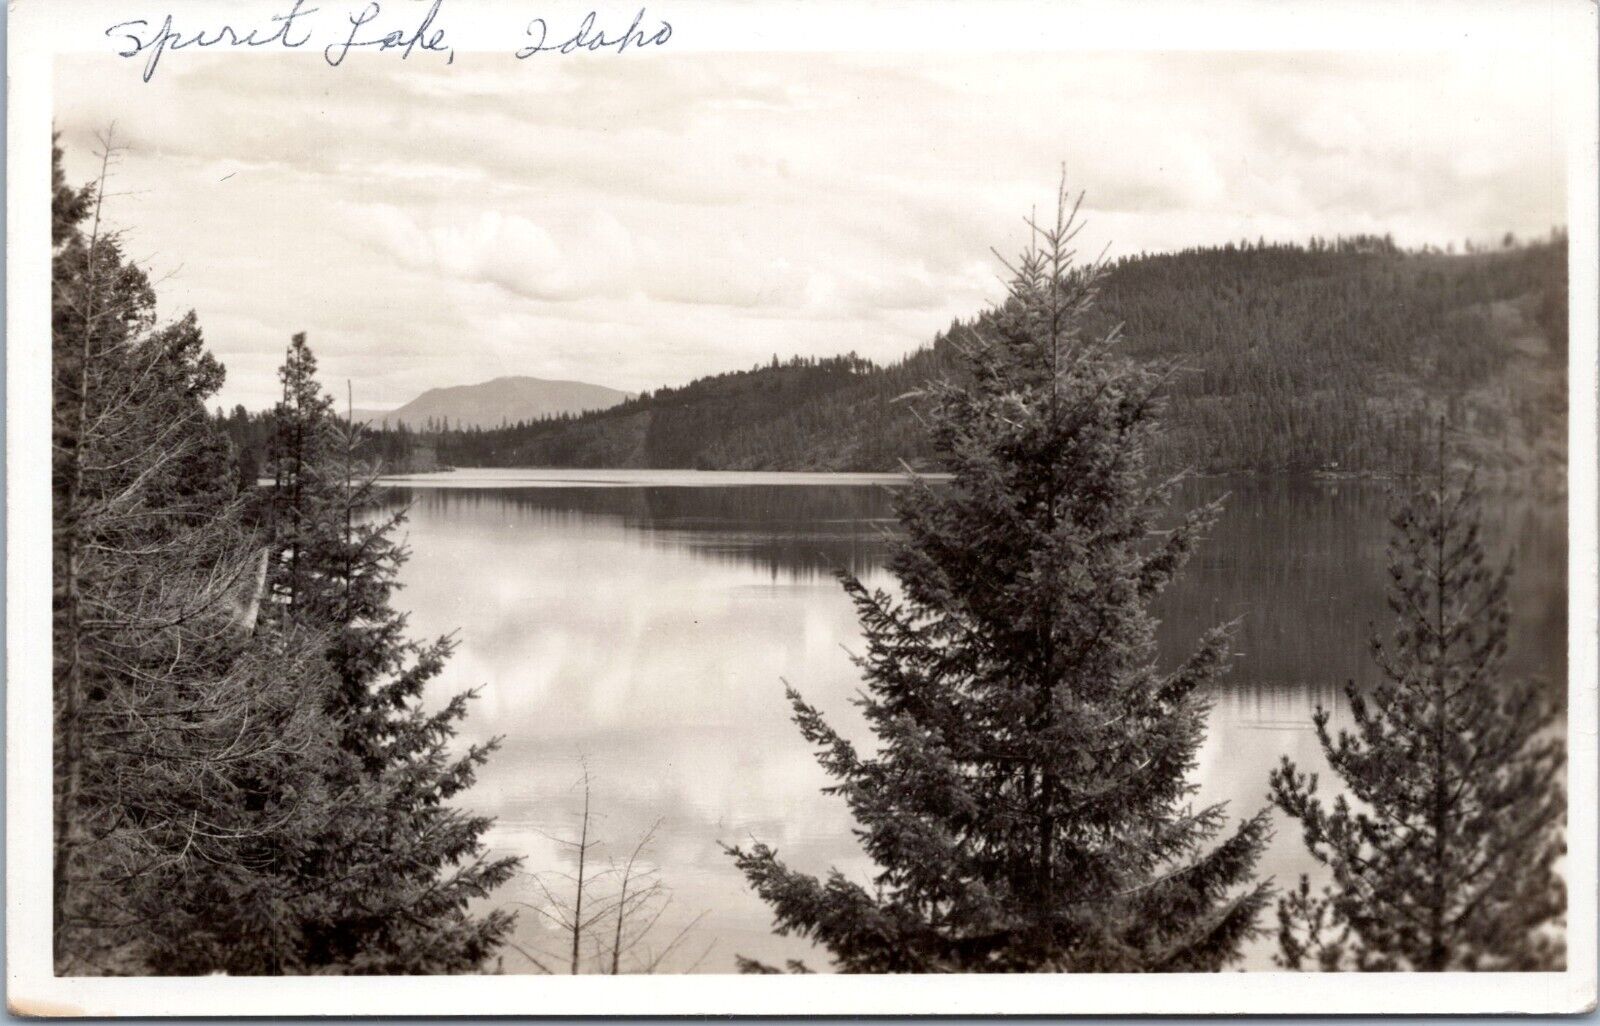 RPPC Spirit Lake, Idaho - Real Photo Postcard c1930s-1940s